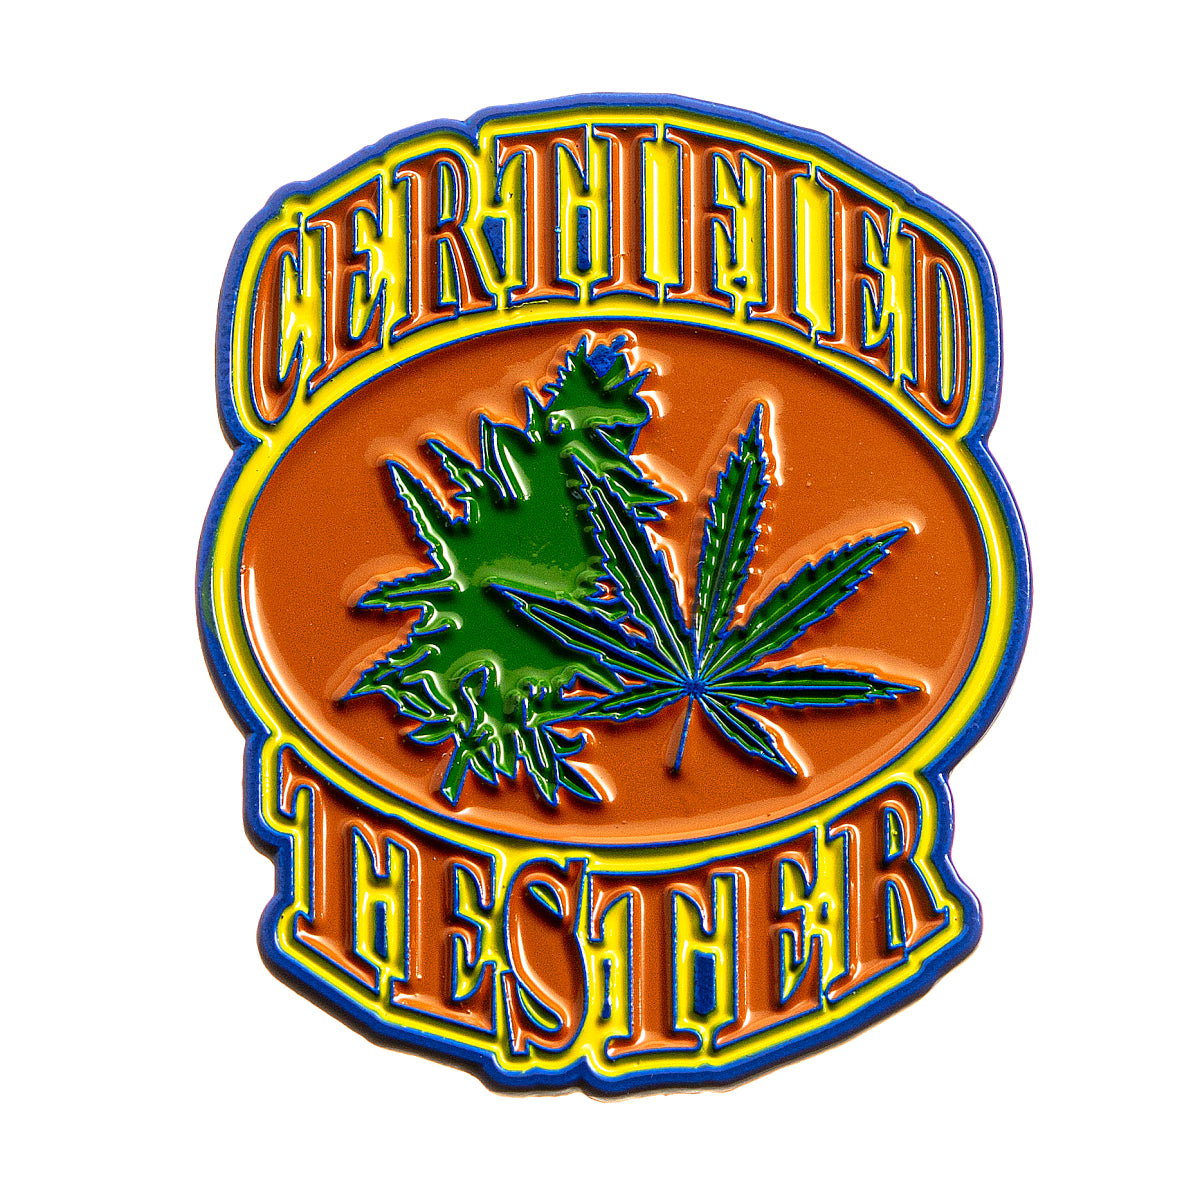 Certified Tester Pin